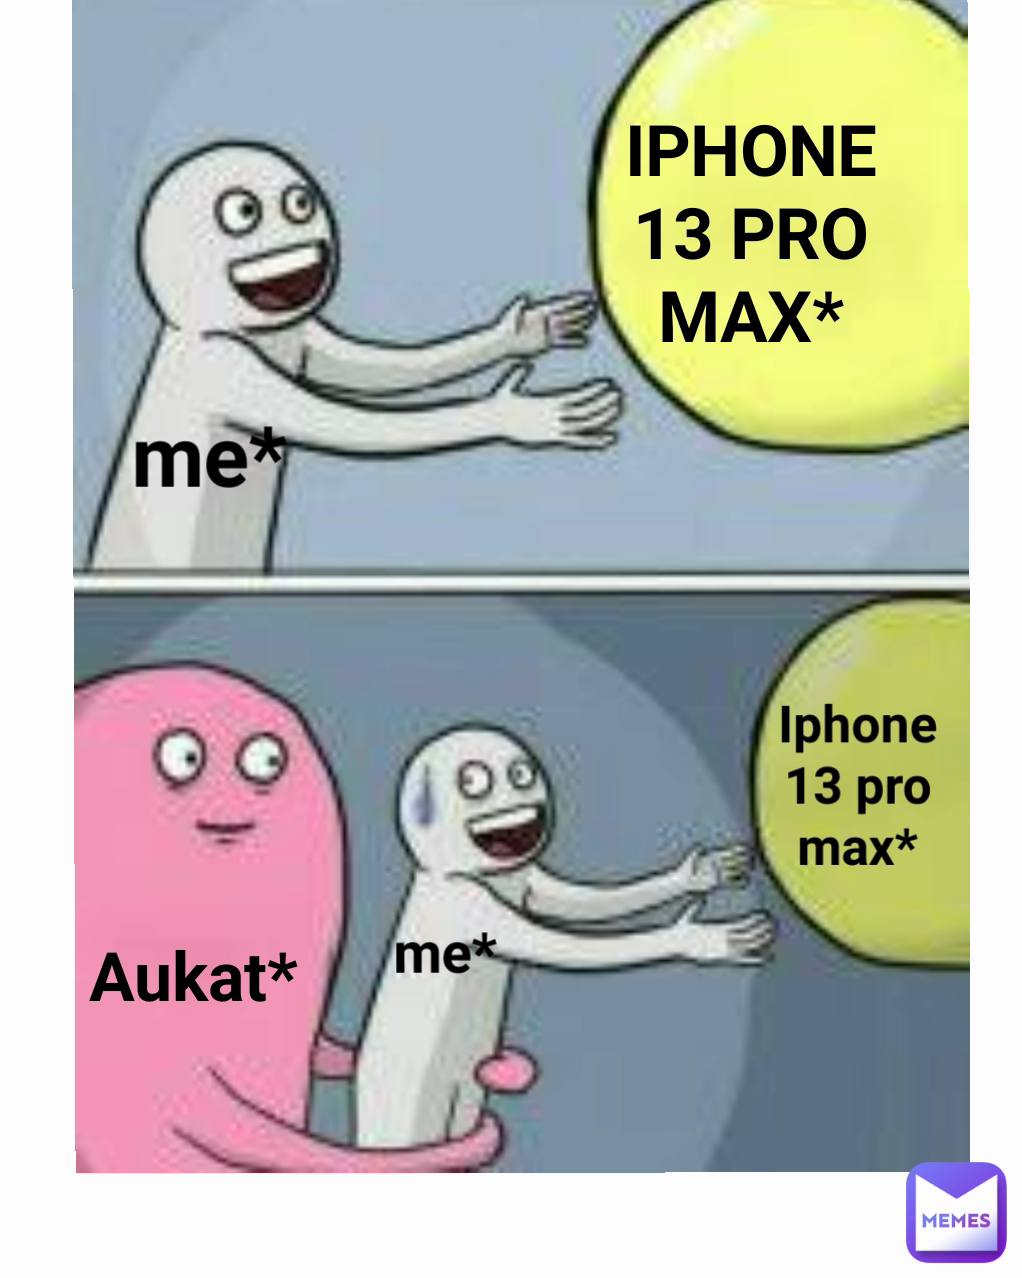 me* IPHONE 13 PRO MAX* Iphone 13 pro max* Aukat*  me*